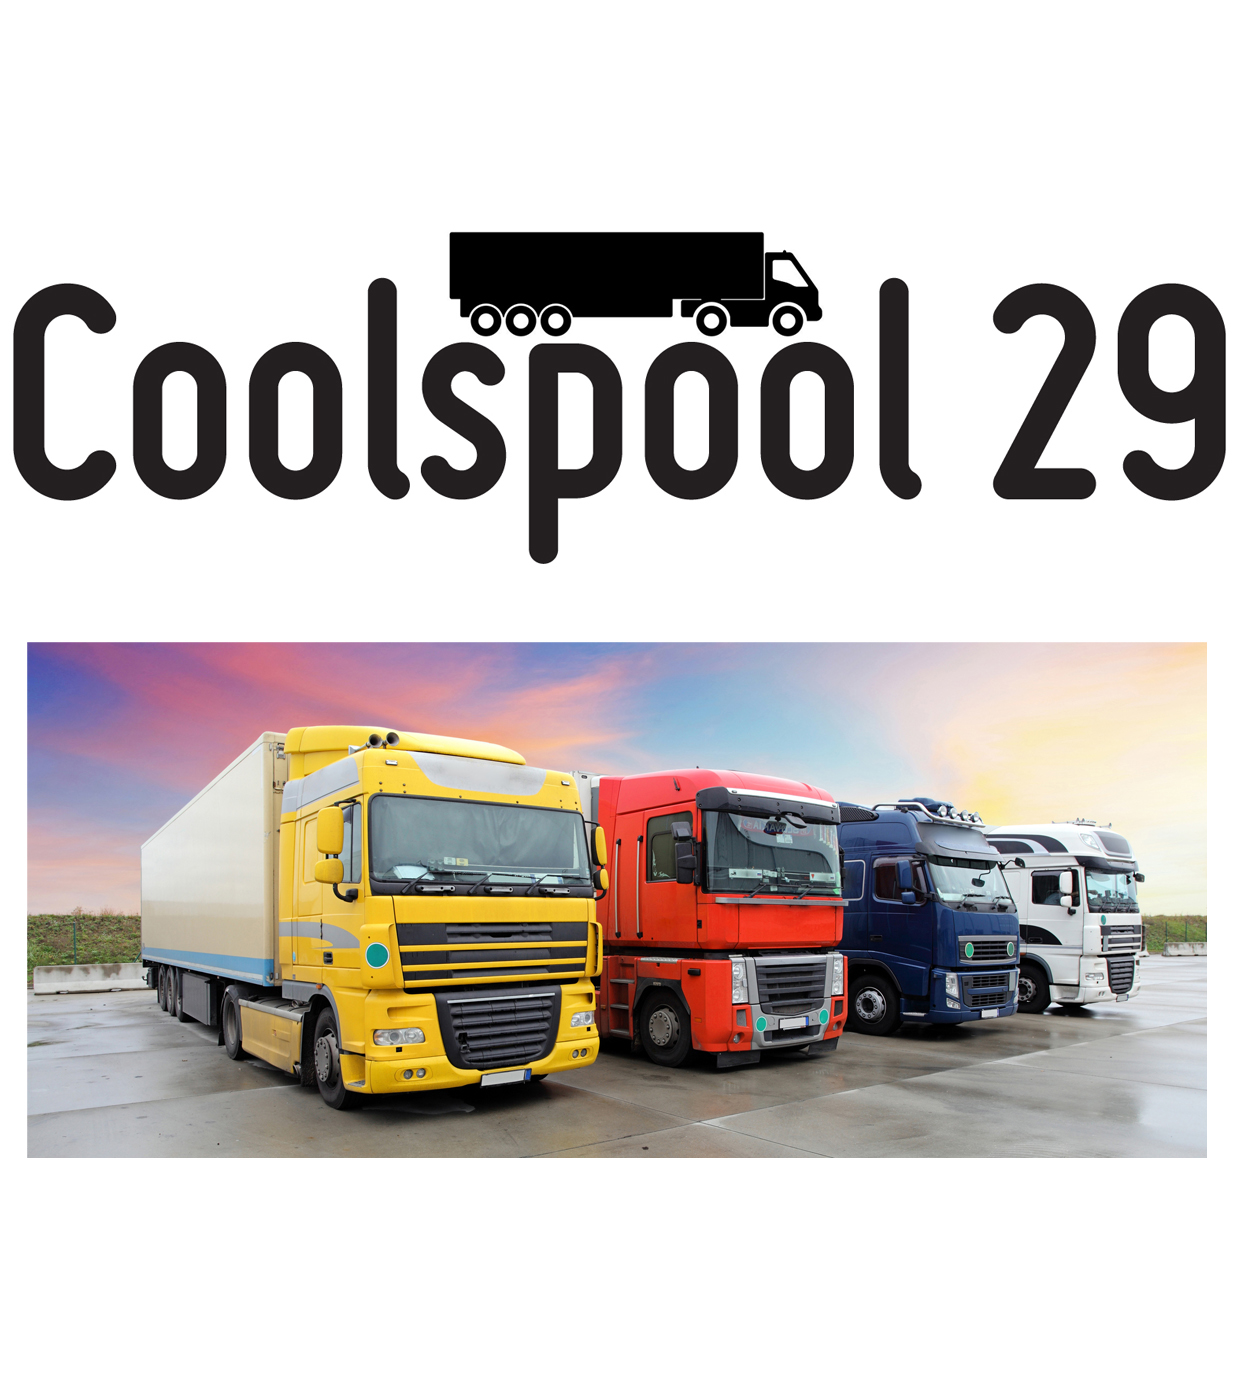 Coolspool 29 on trailers